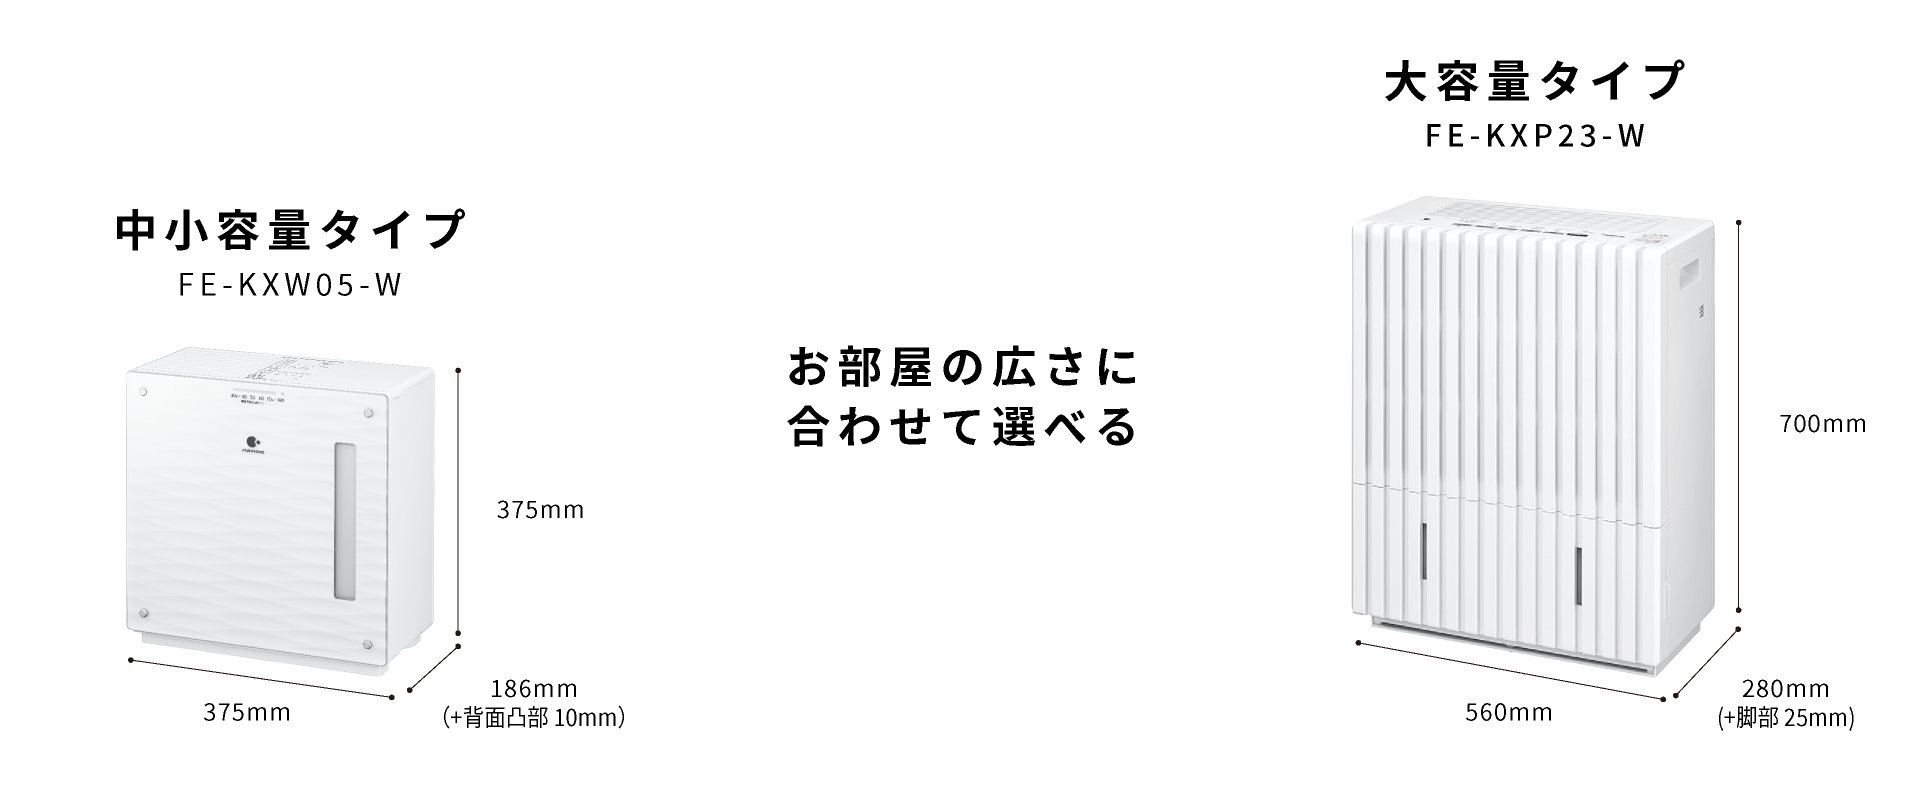 panasonic.jp/content/panasonic/jp/ja/kashitsu/prod